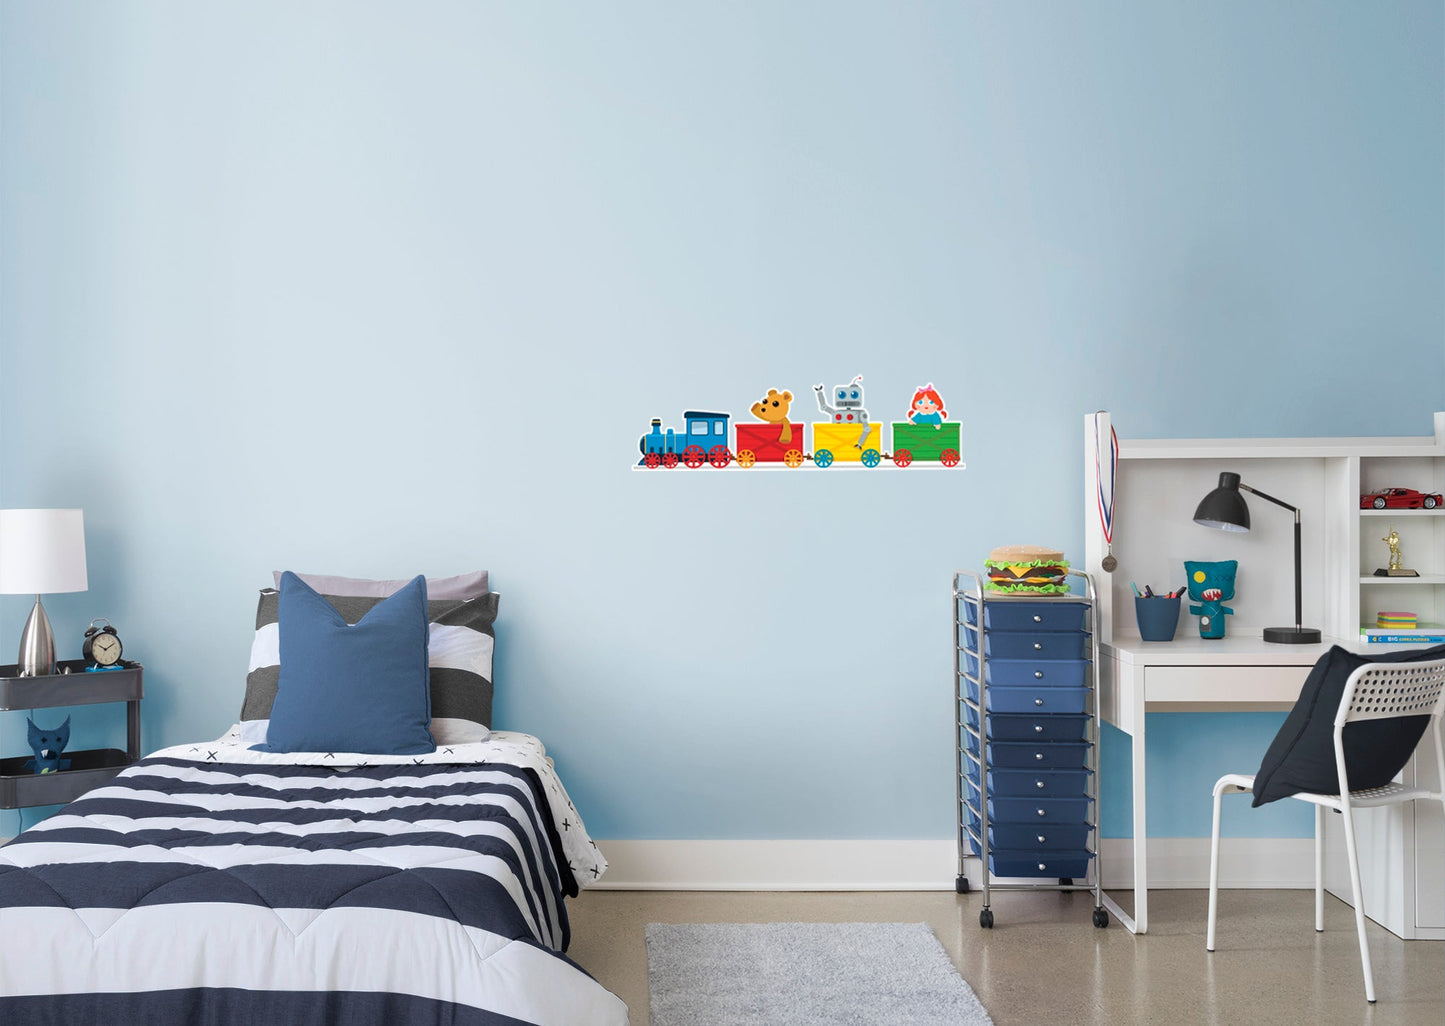 Nursery:  Robot Icon        -   Removable Wall   Adhesive Decal